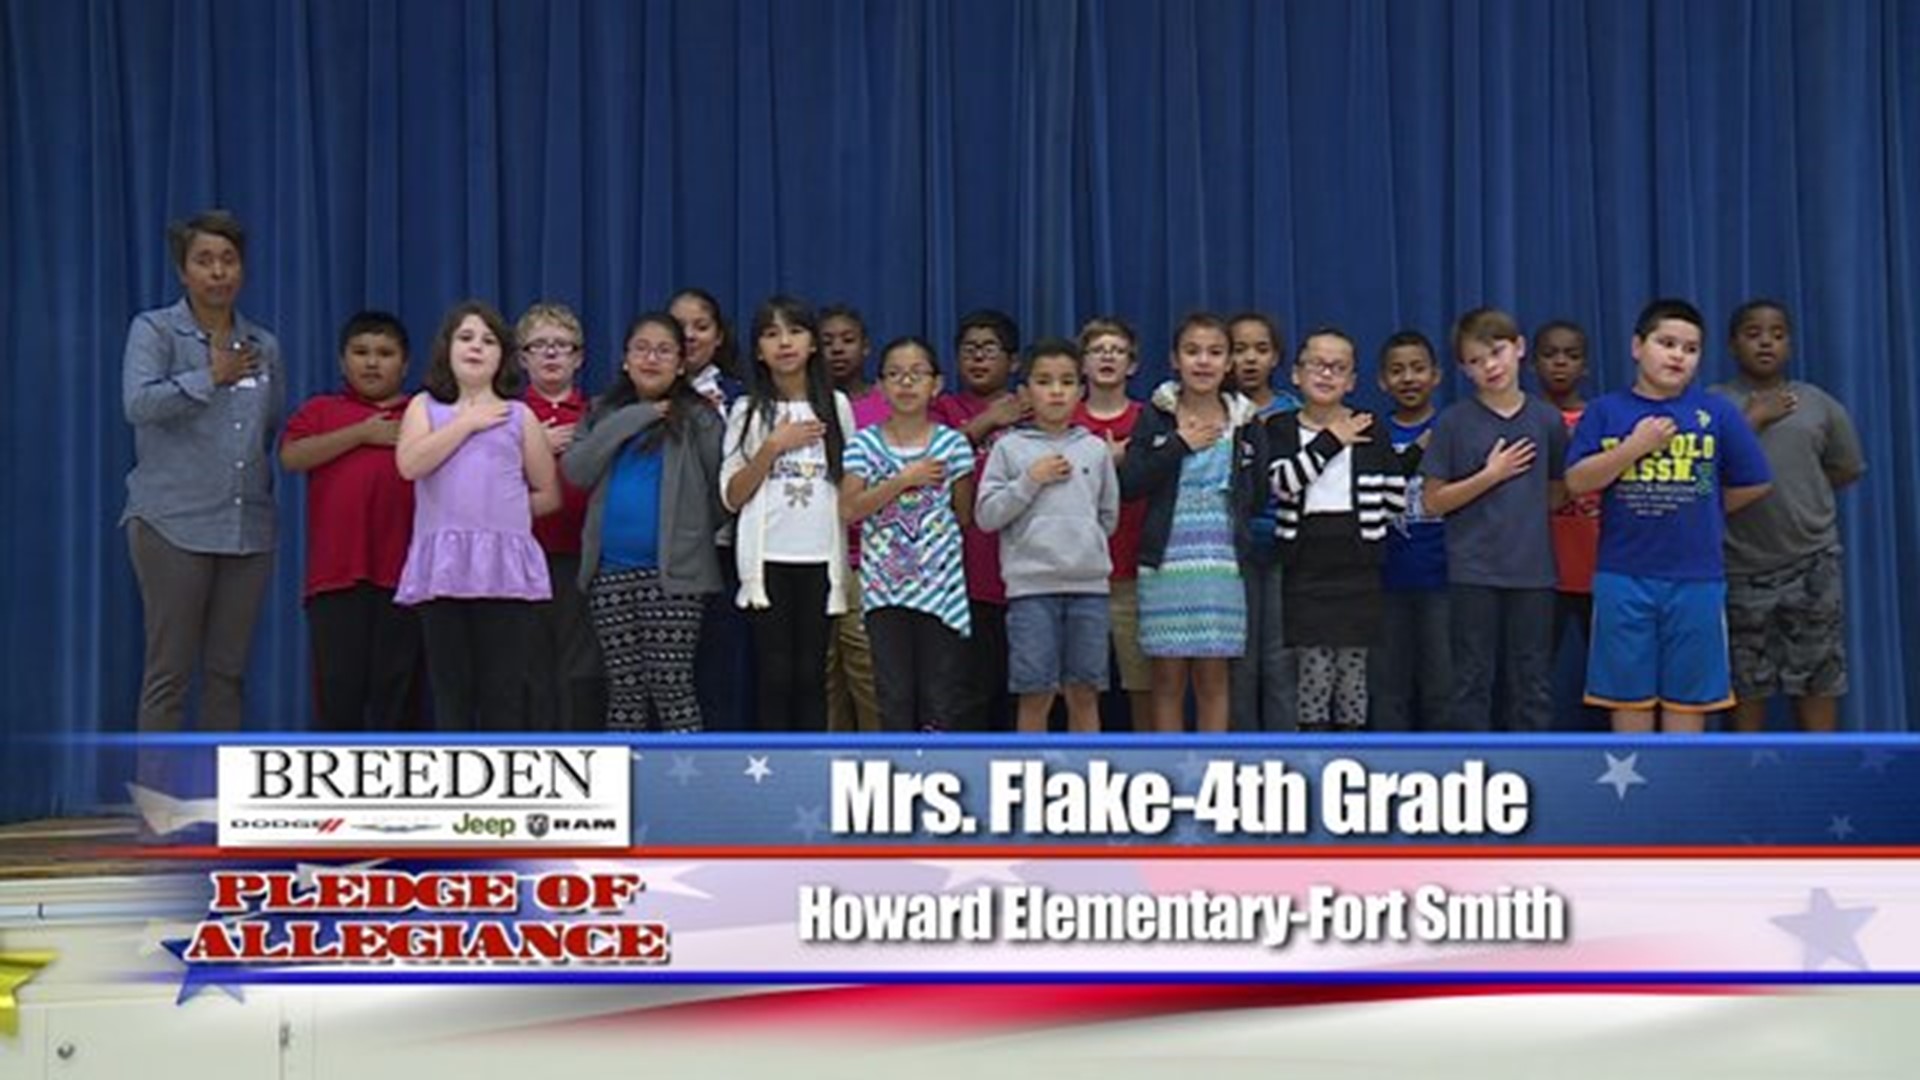 Howard Elementary, Fort Smith - Mrs. Flake - 4th Grade